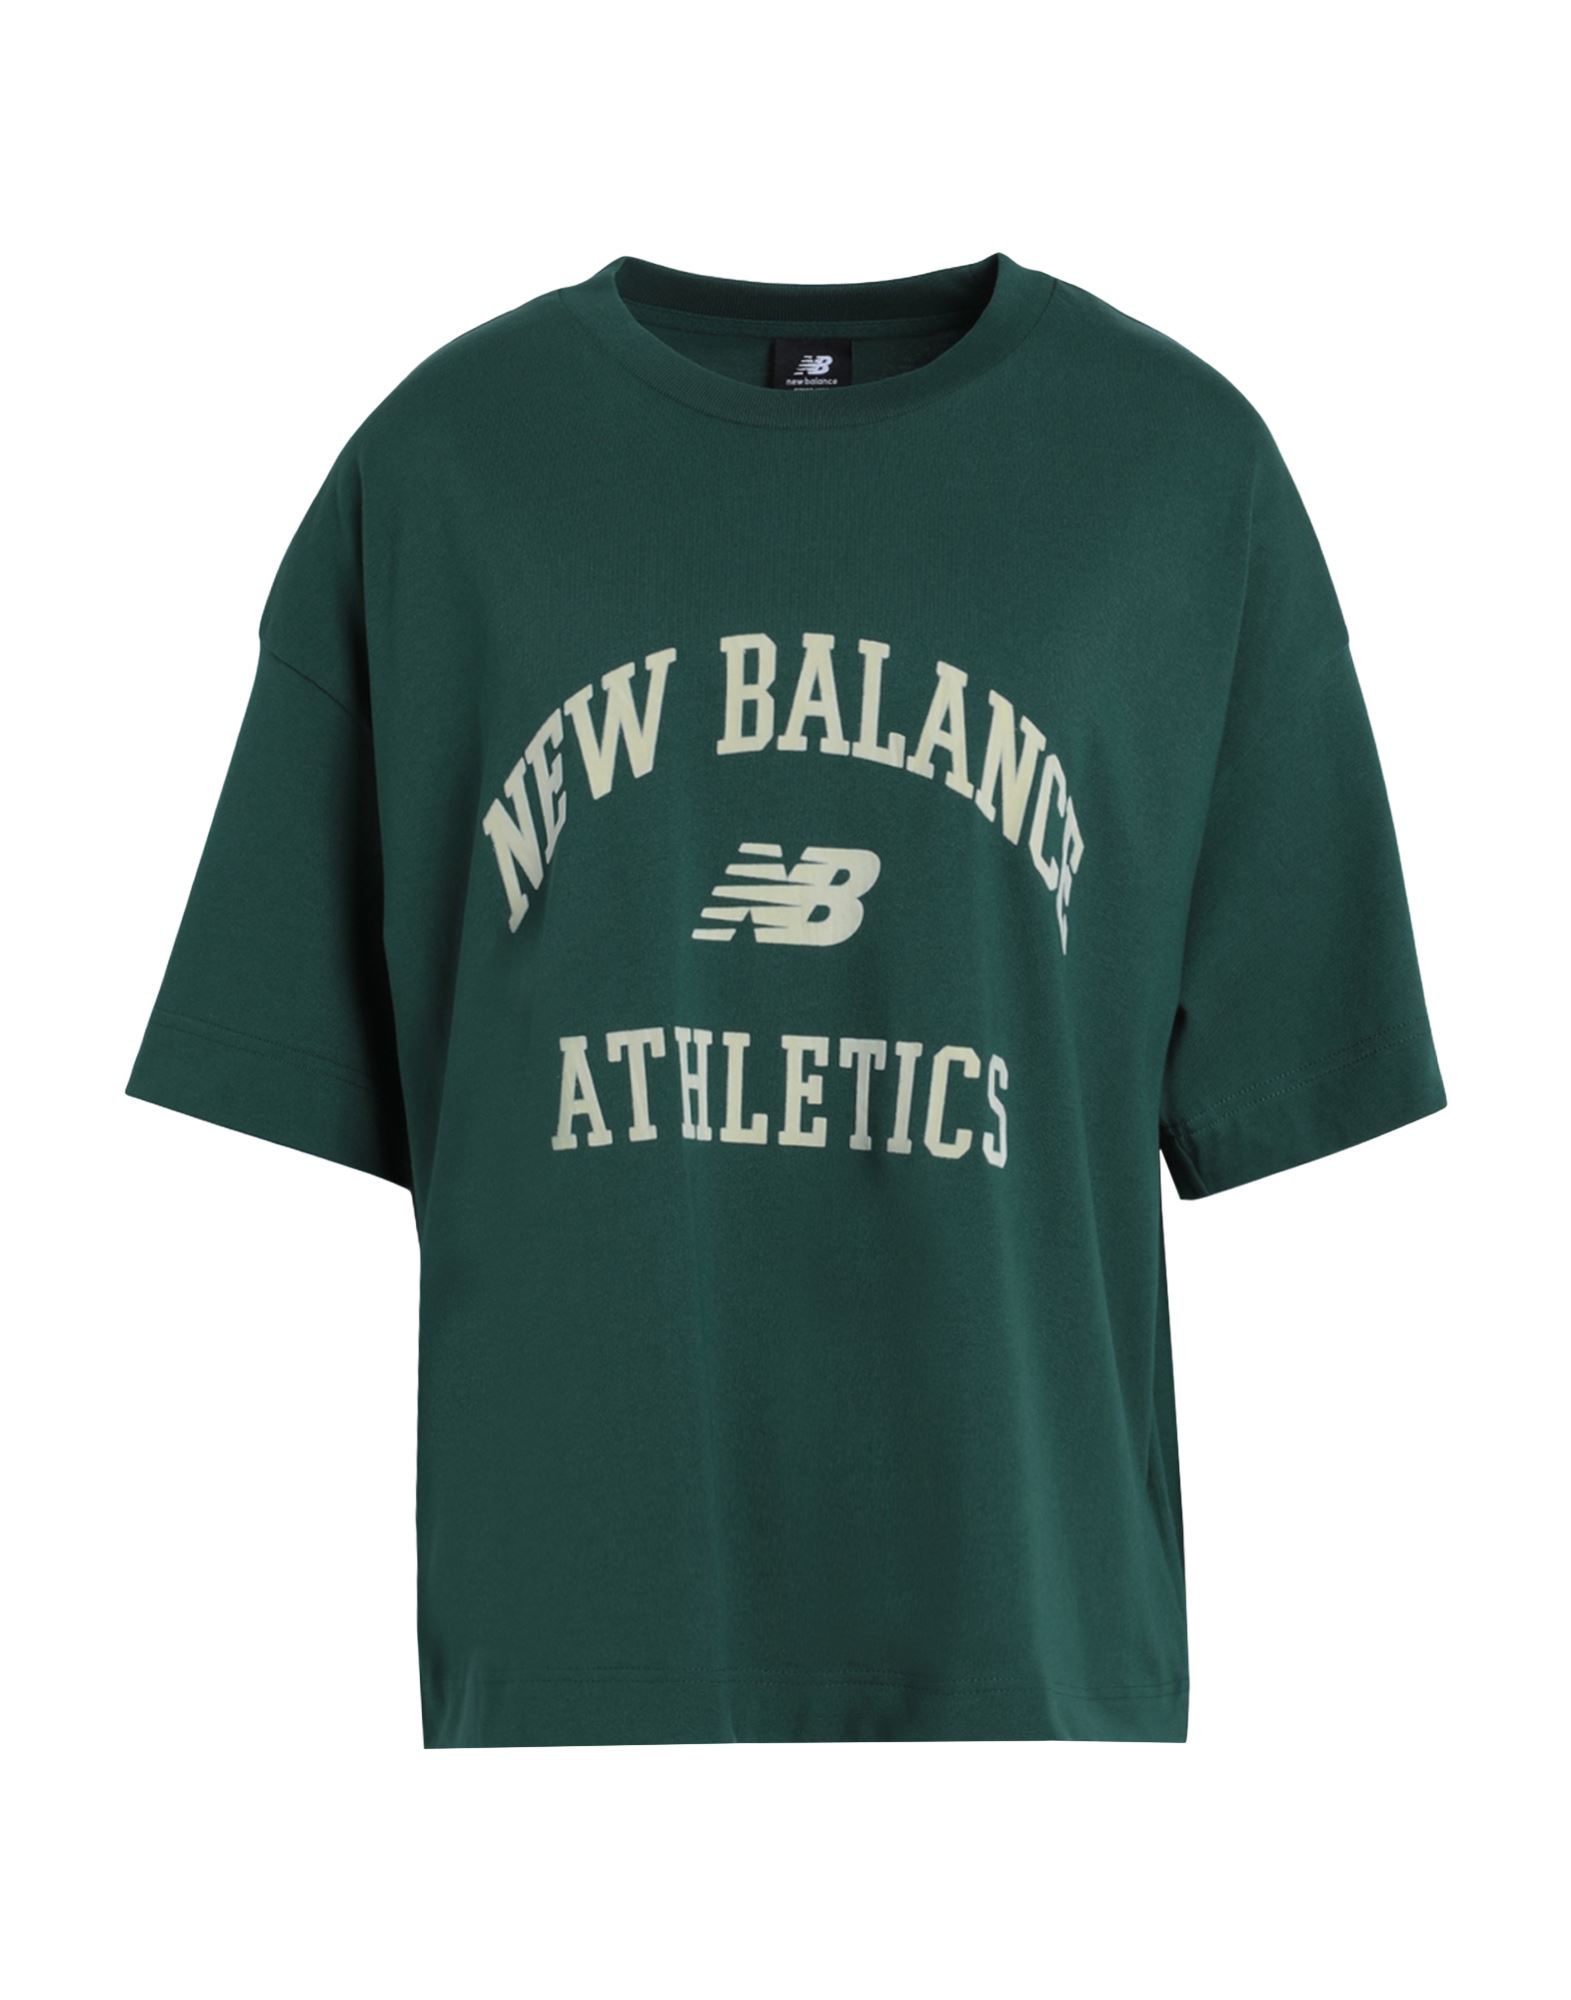 NEW BALANCE T-shirts Damen Dunkelgrün von NEW BALANCE